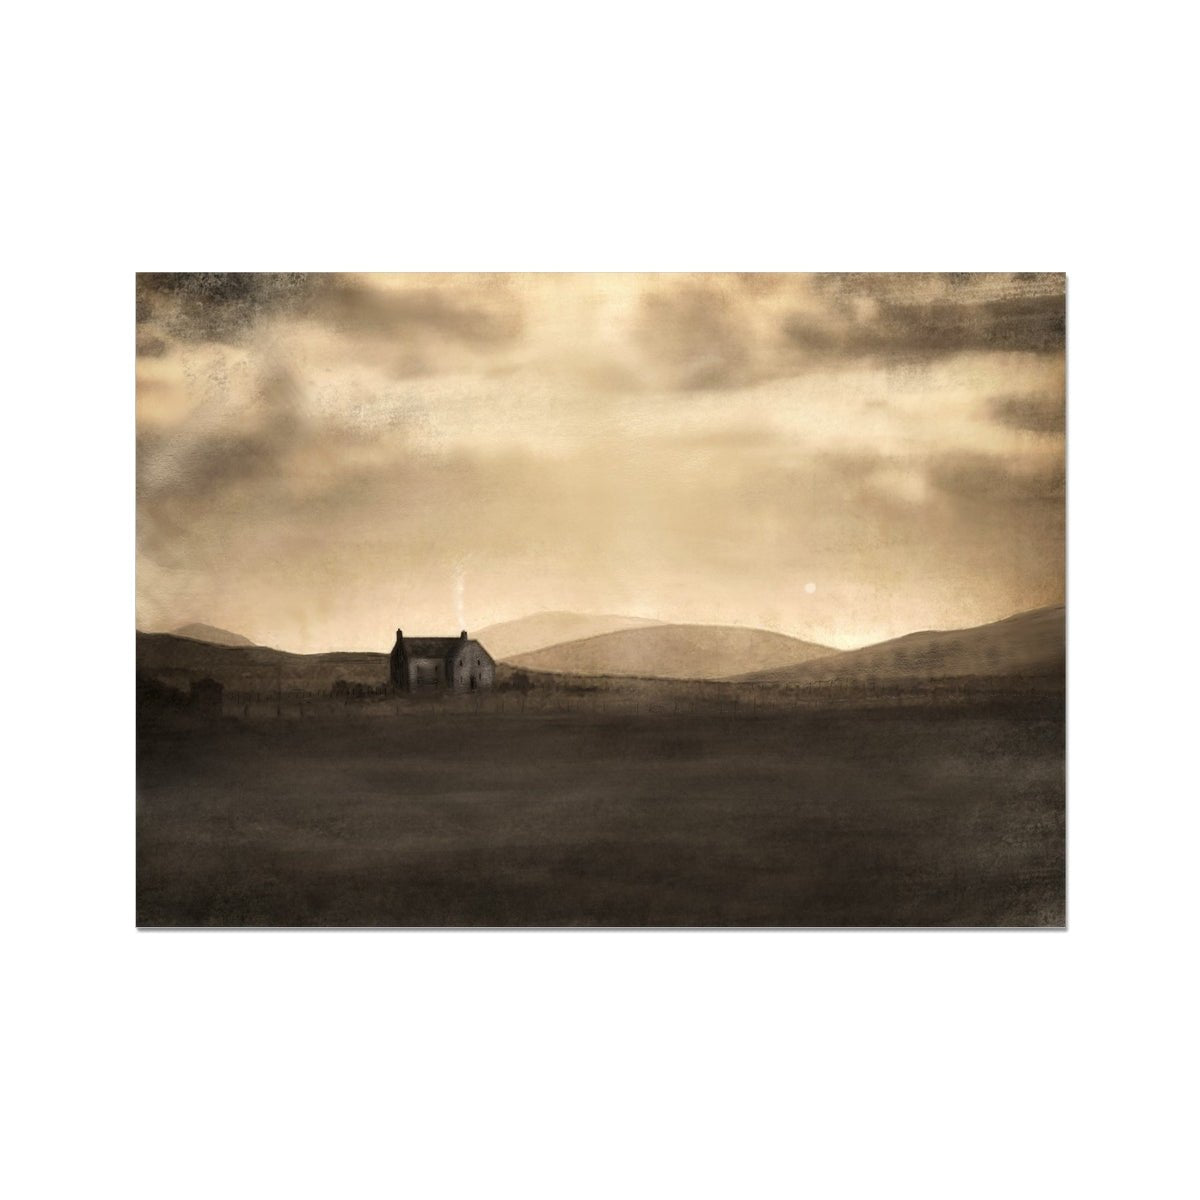 A Moonlit Croft Painting | Fine Art Prints From Scotland-Unframed Prints-Hebridean Islands Art Gallery-A2 Landscape-Paintings, Prints, Homeware, Art Gifts From Scotland By Scottish Artist Kevin Hunter